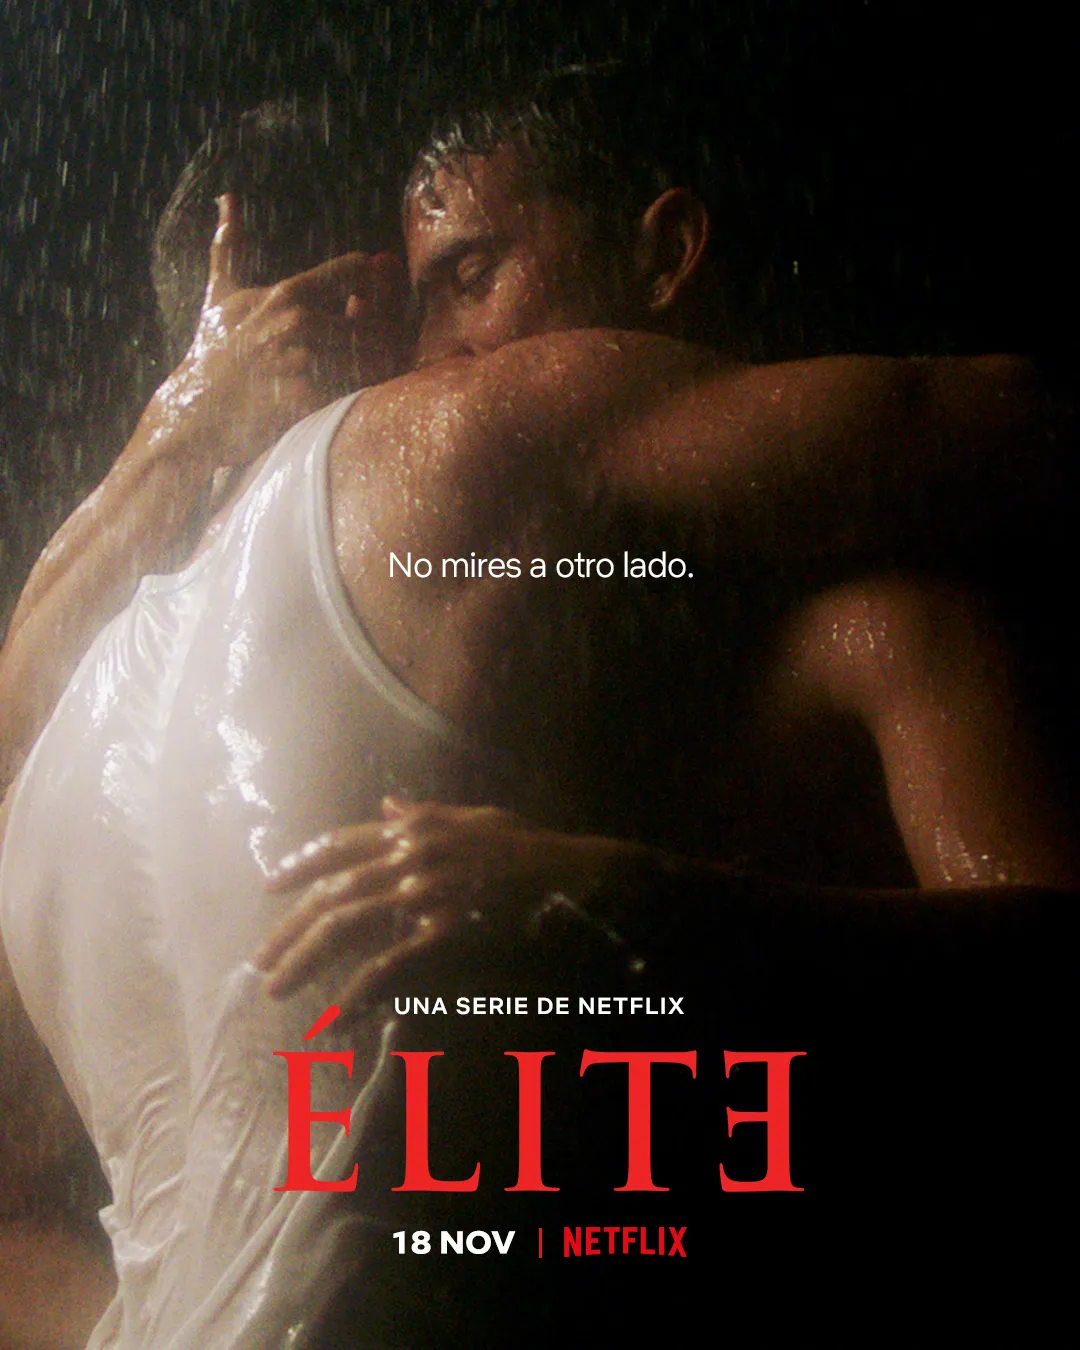 Netflix's hit Spanish drama 'Élite Season 6' releases posters | FMV6